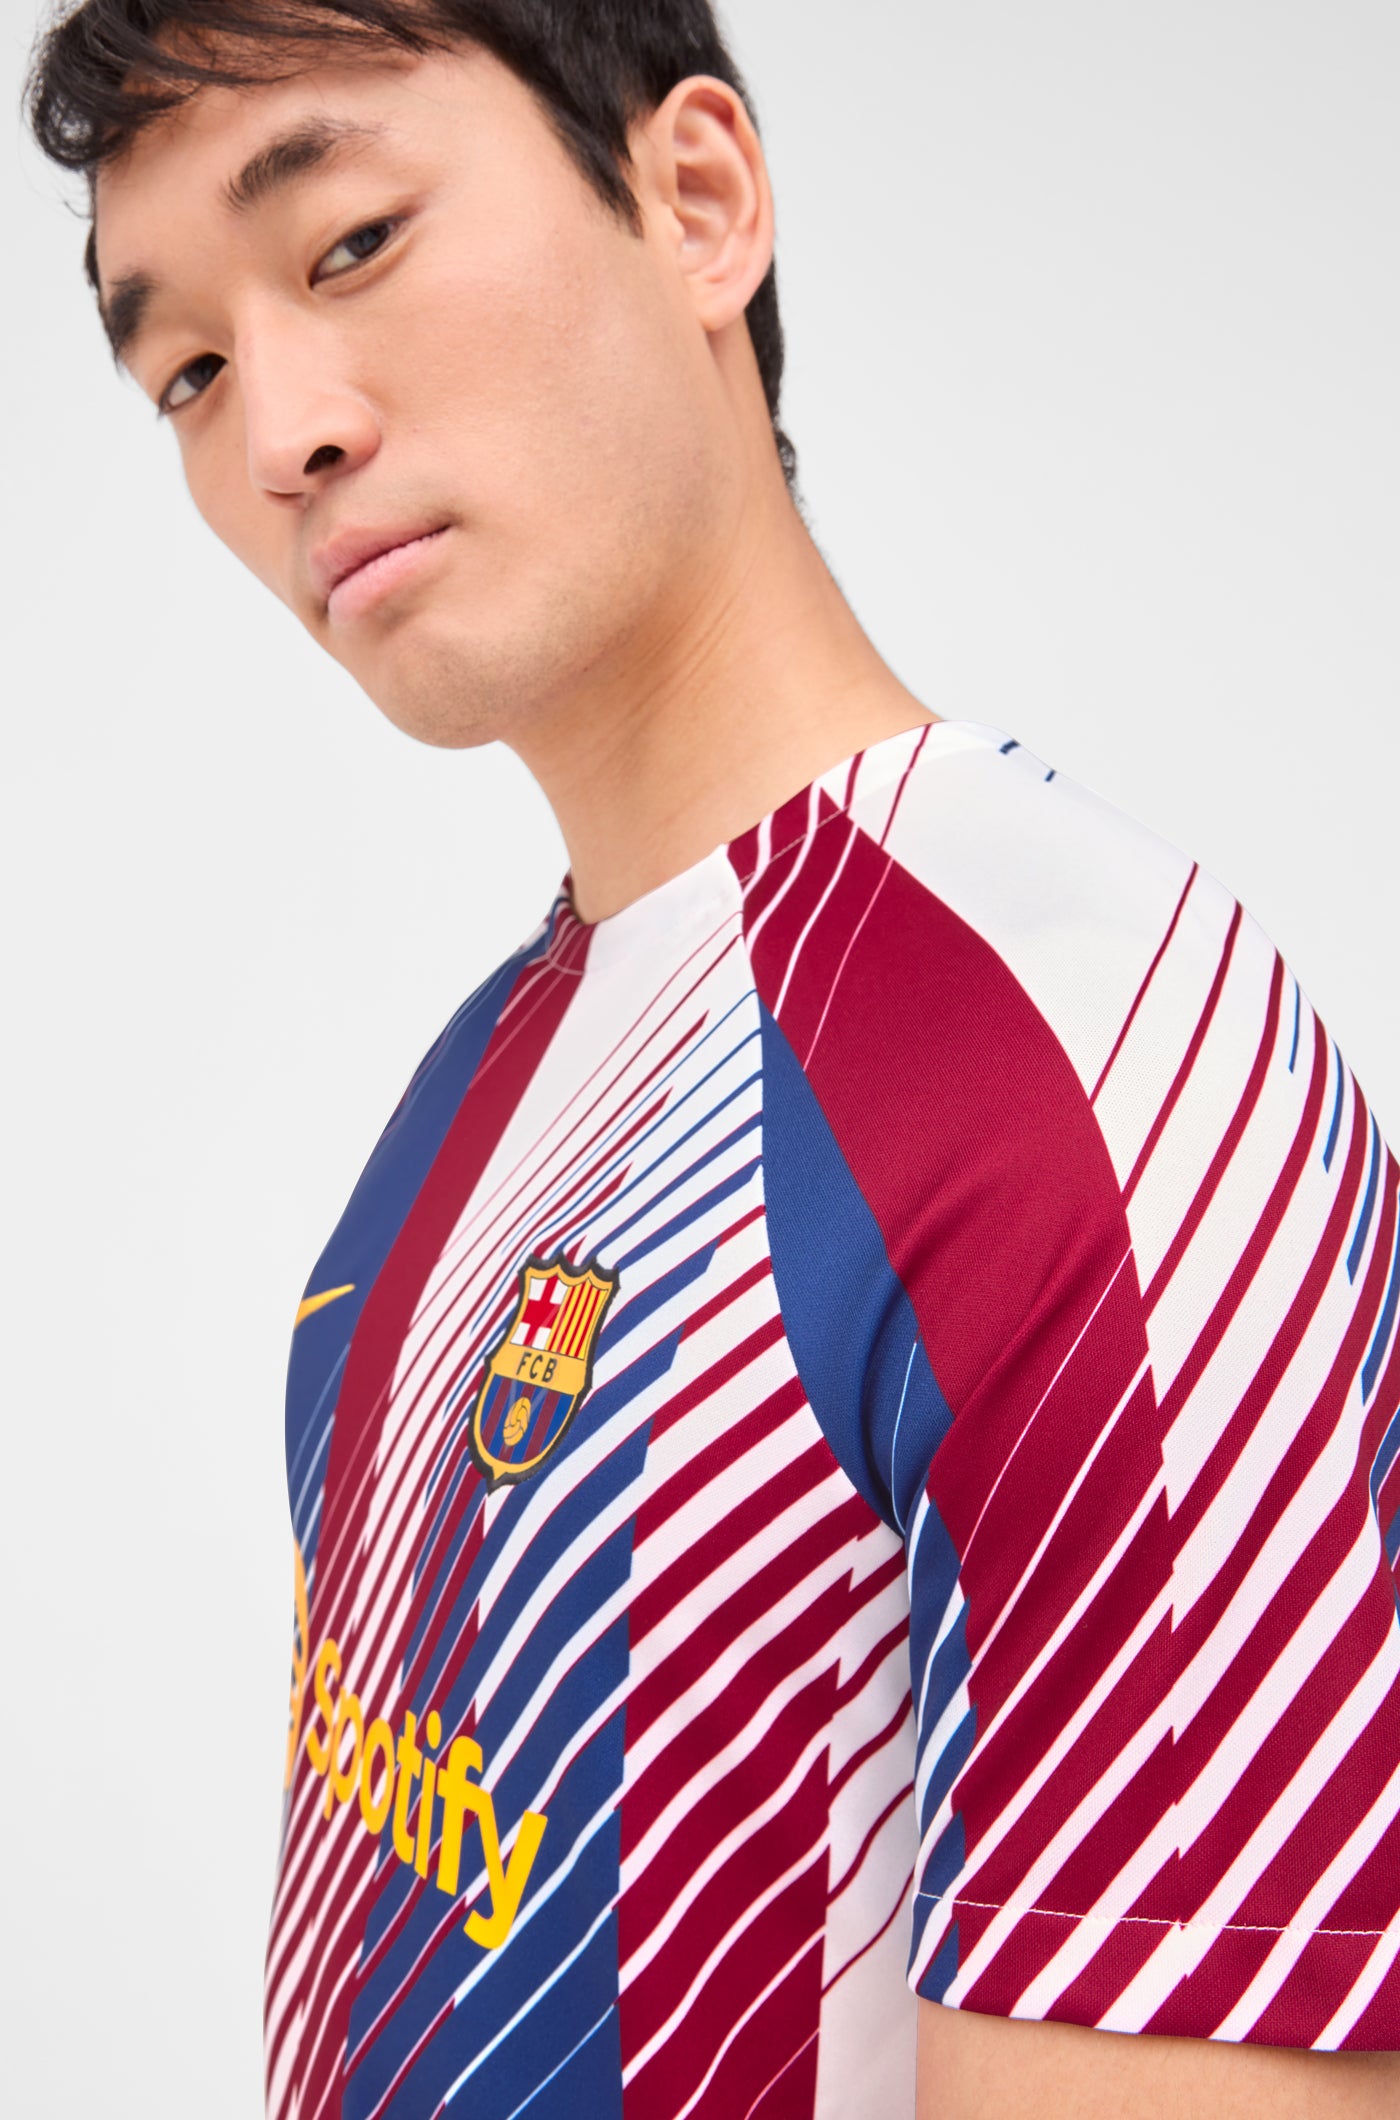 Camiseta Barcelona FC MATCH El Clásico 20/21 - La Liga [21400M] - €19.90 